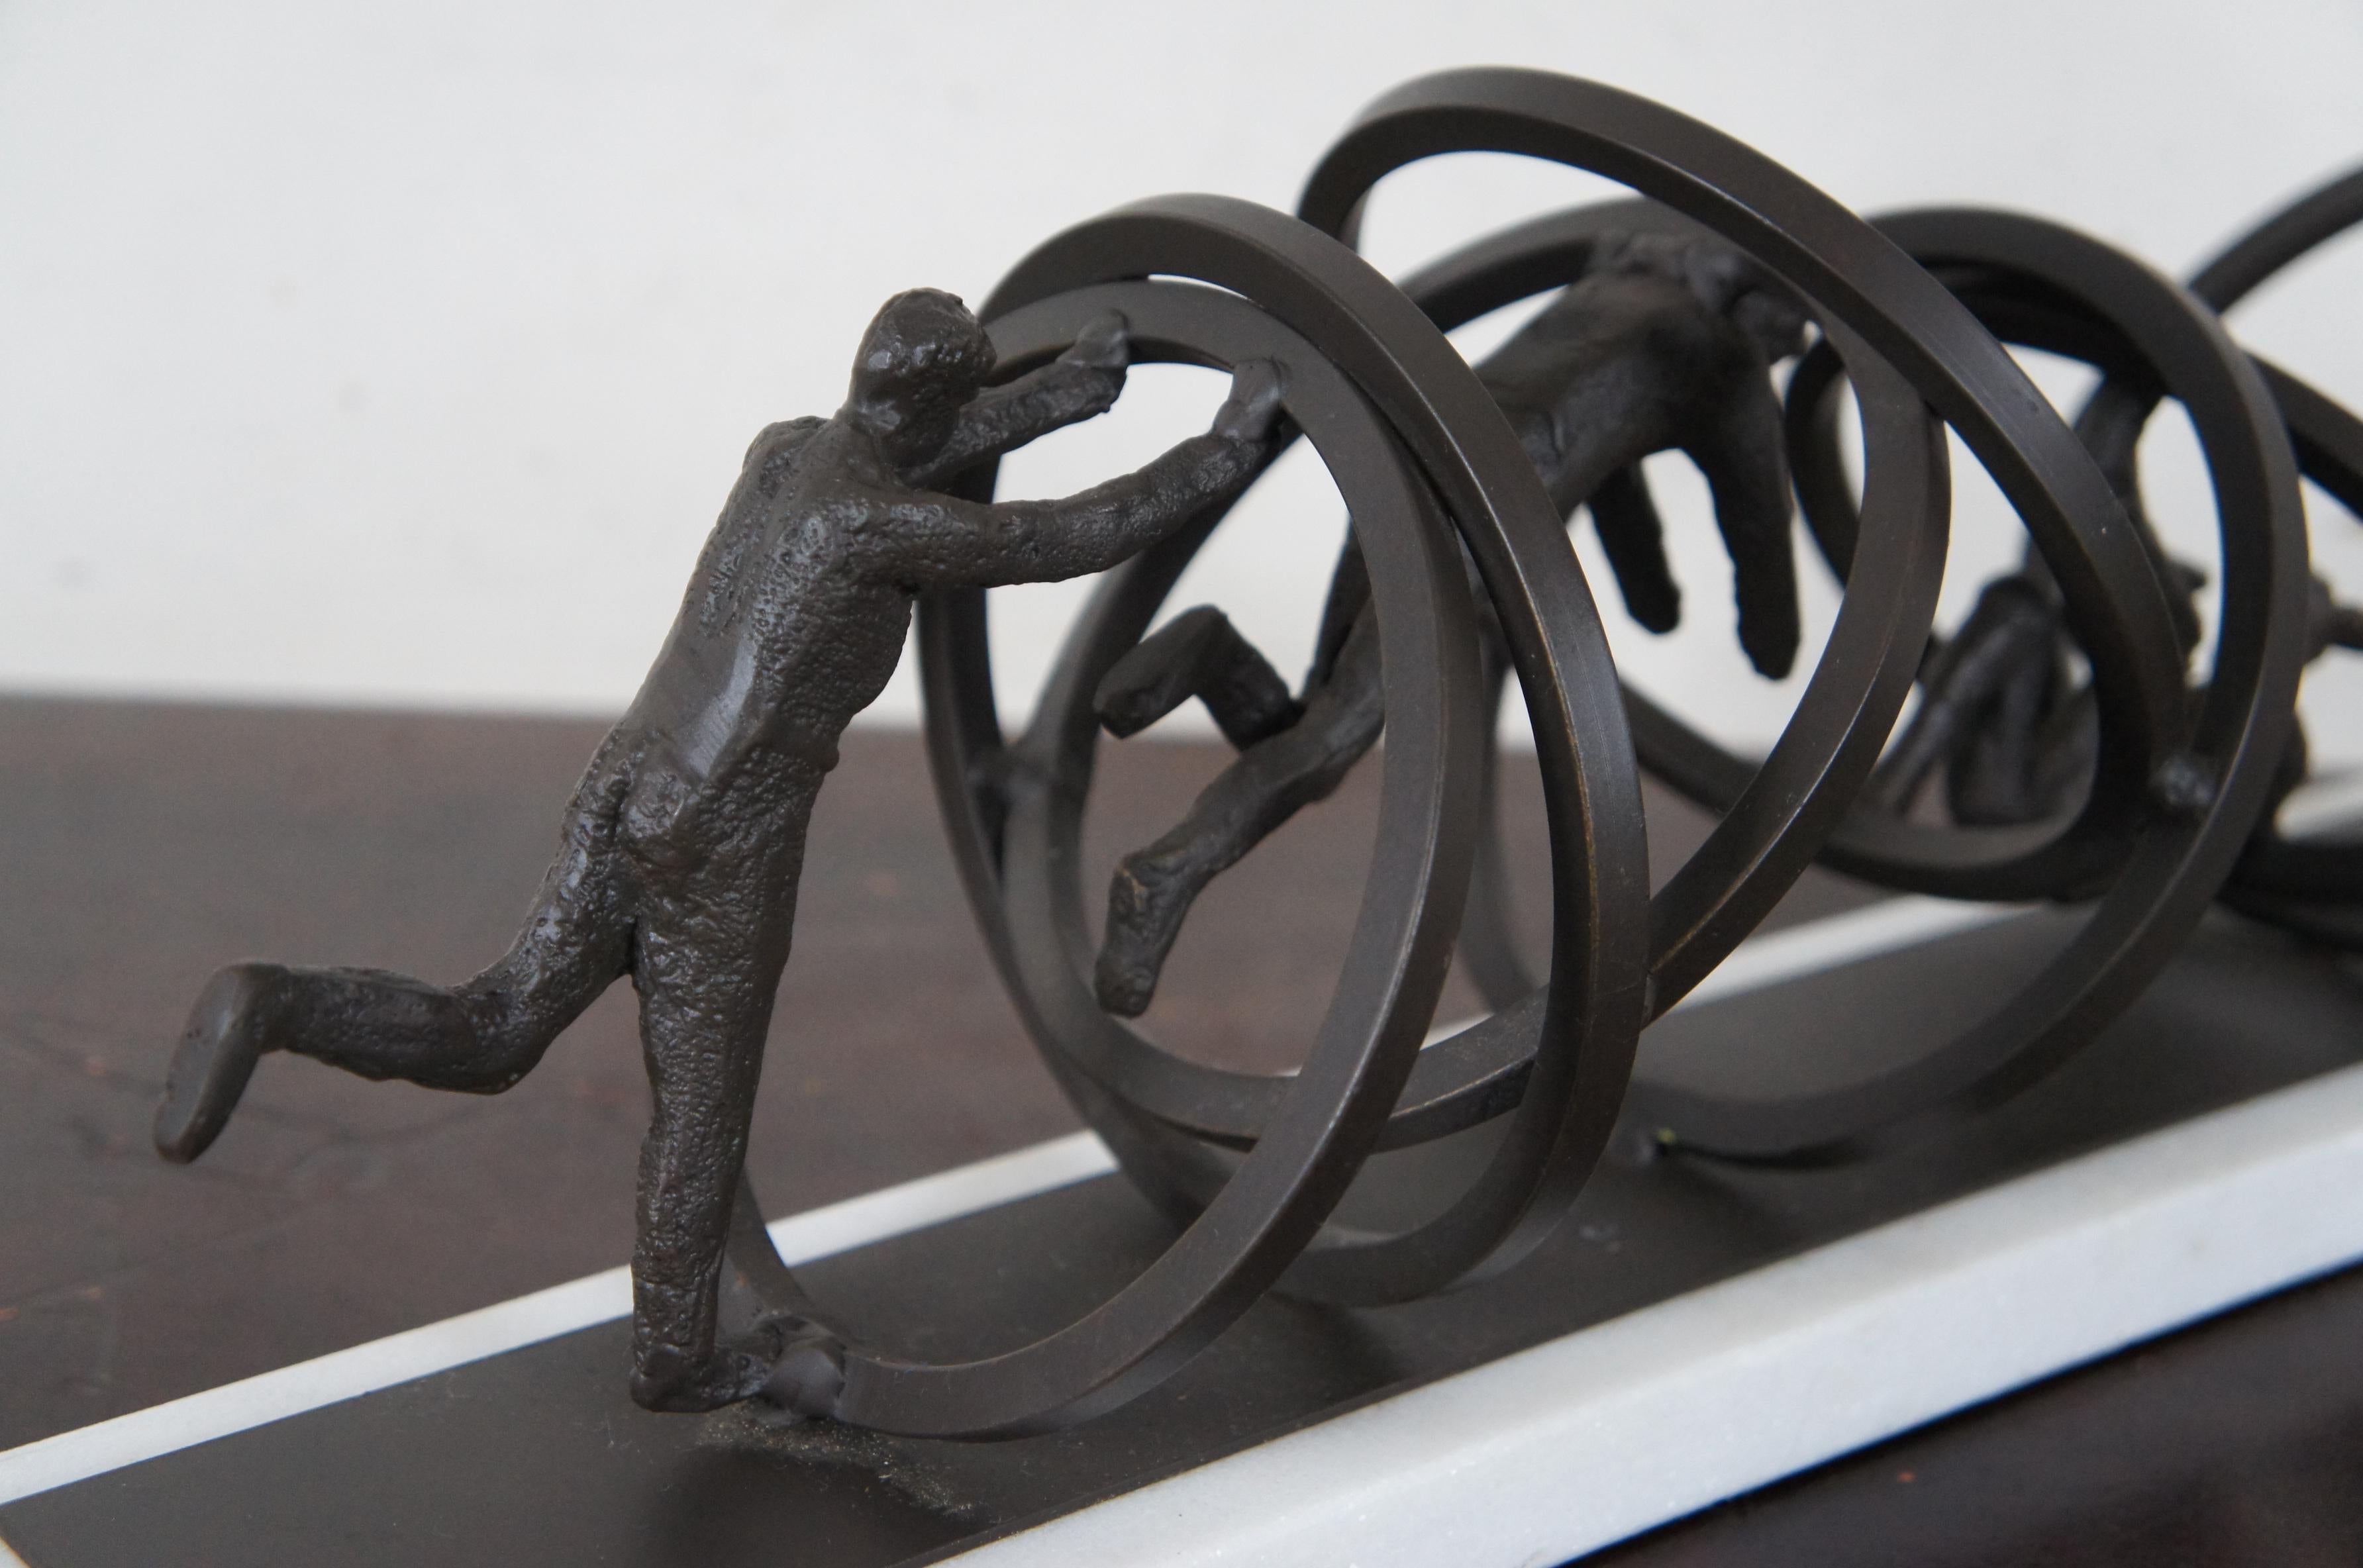 Global Views Iron & Marble Jumping Through Hoops Rings Acrobat Sculpture 4